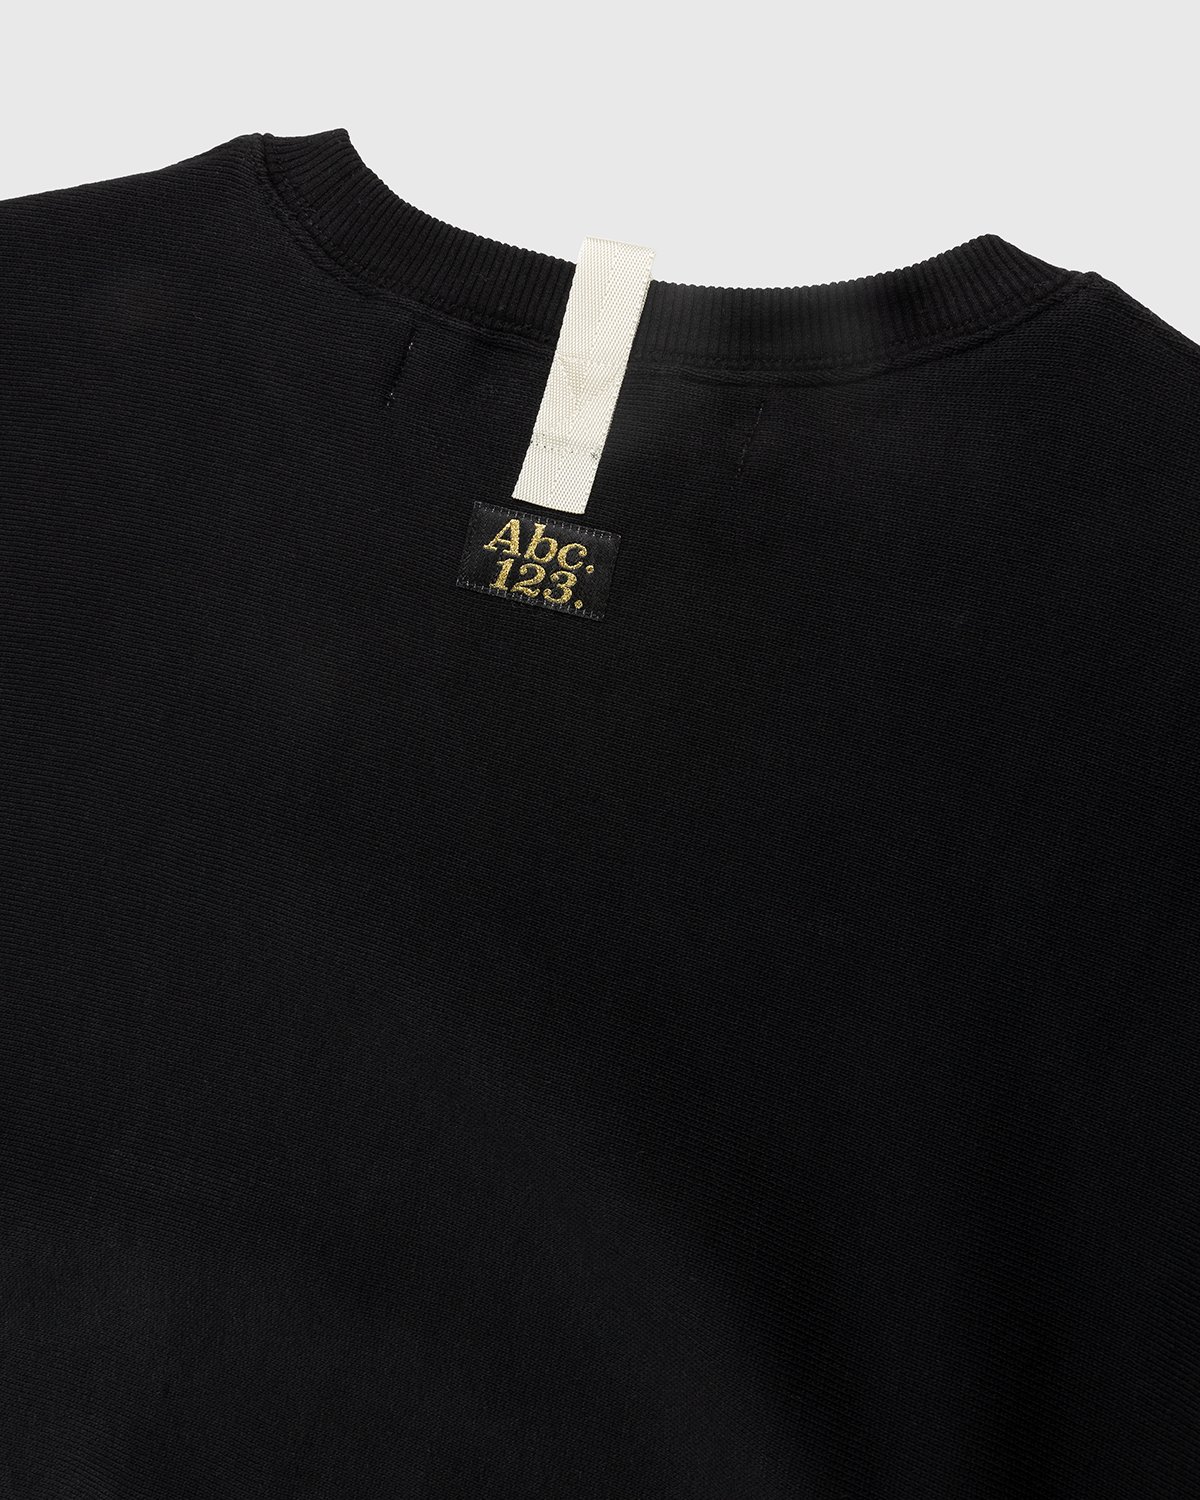 Abc. - French Terry Crewneck Sweatshirt Anthracite - Clothing - Black - Image 3